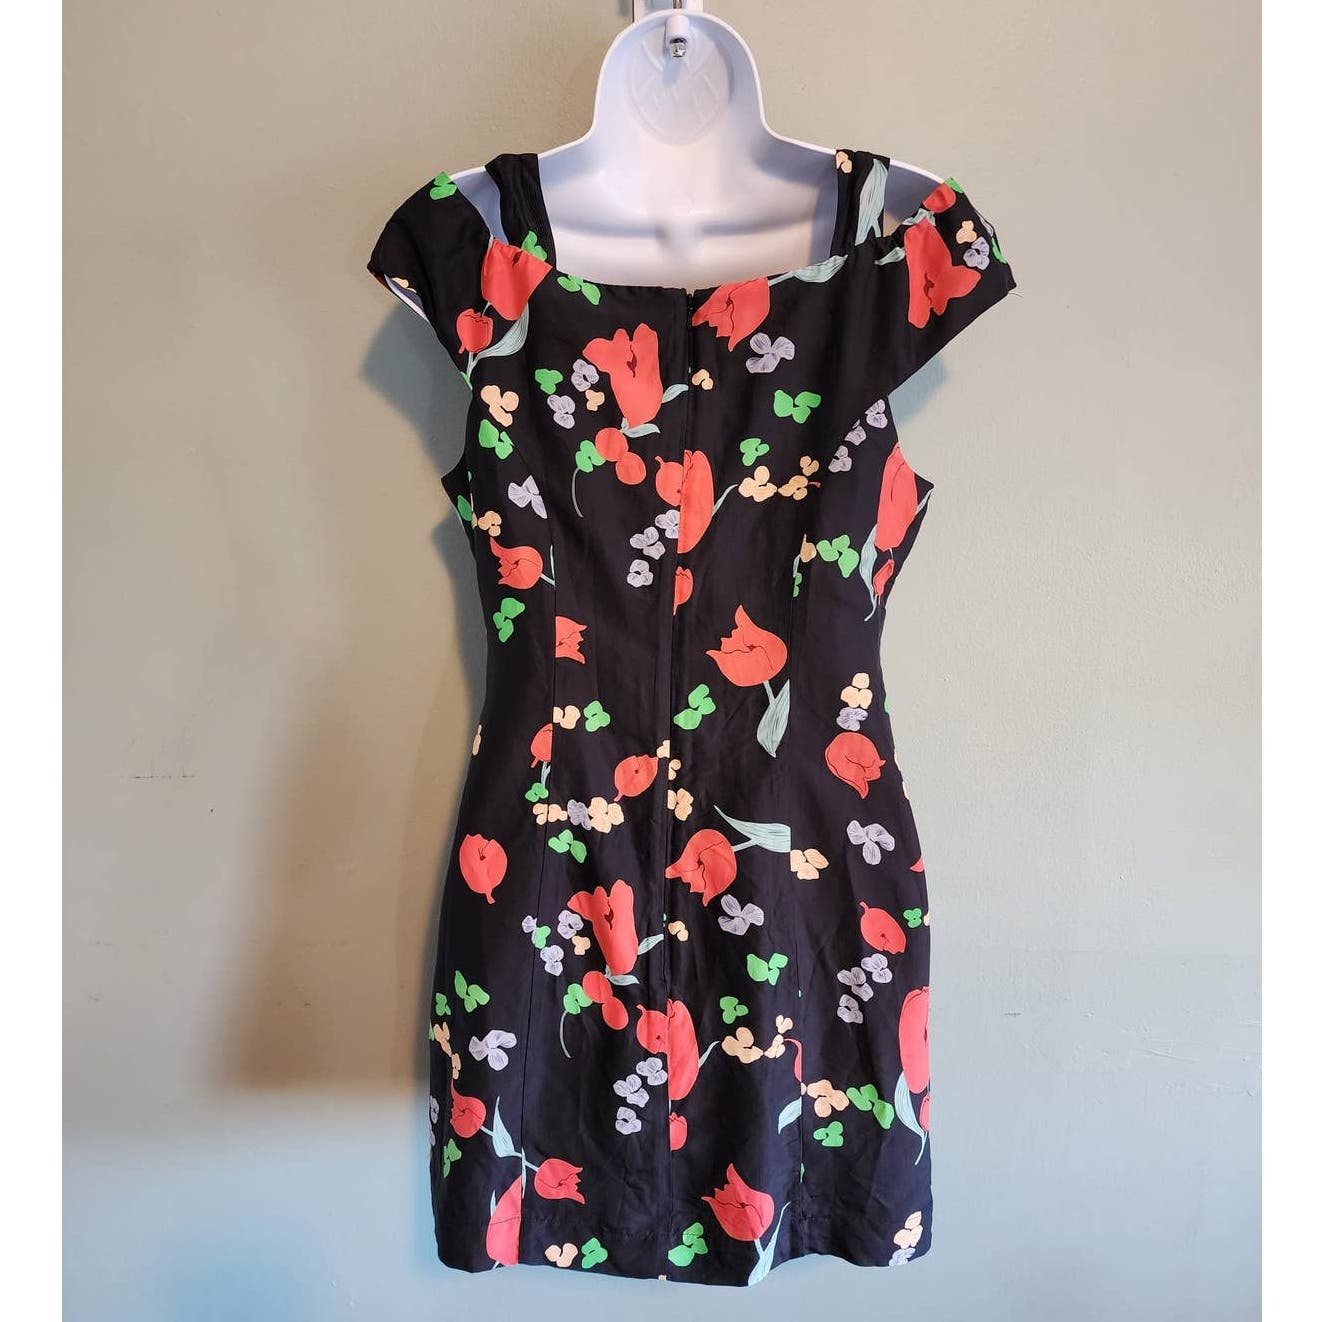 NWT Alice McCall Ebony Confetti Dress Size 6